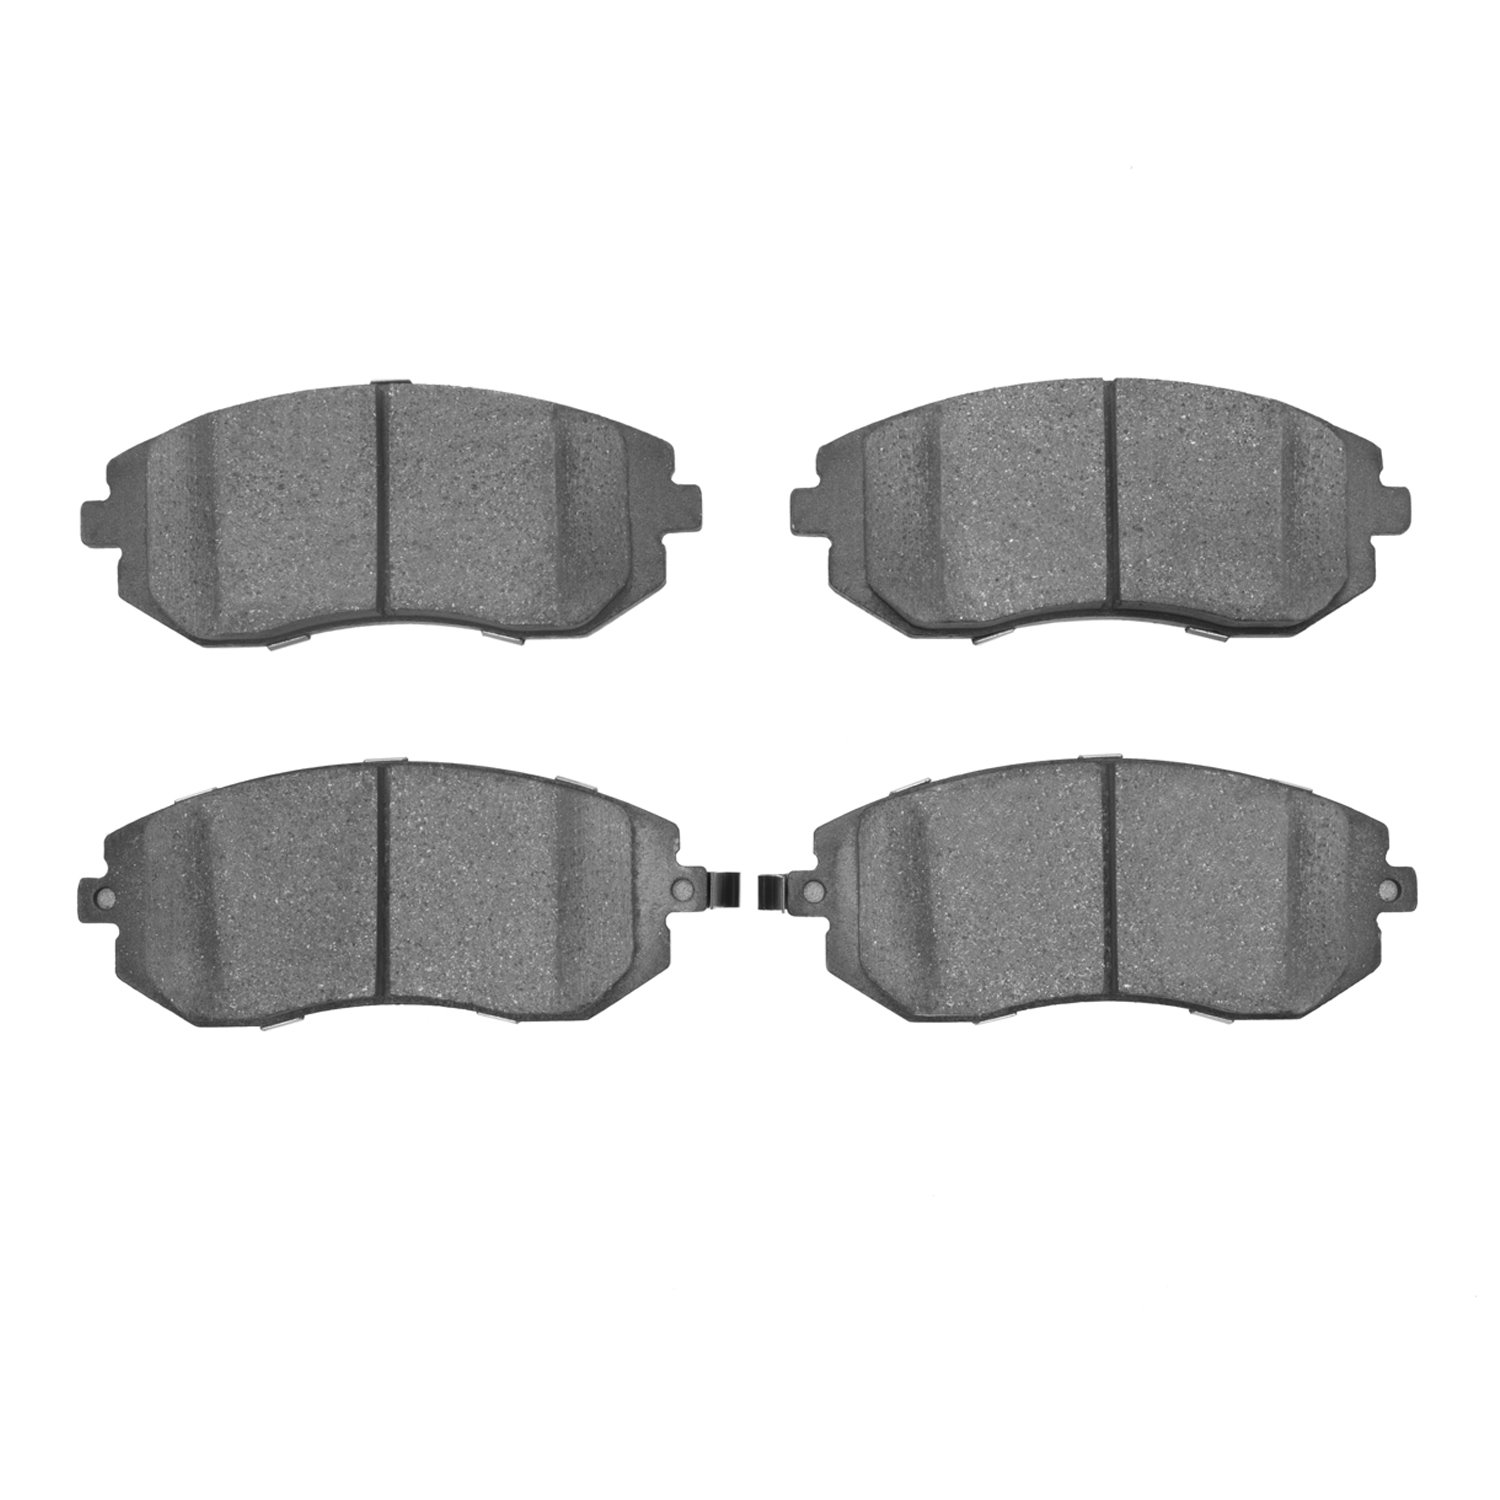 Semi-Metallic Brake Pads, 2002-2012 Fits Multiple Makes/Models, Position: Front